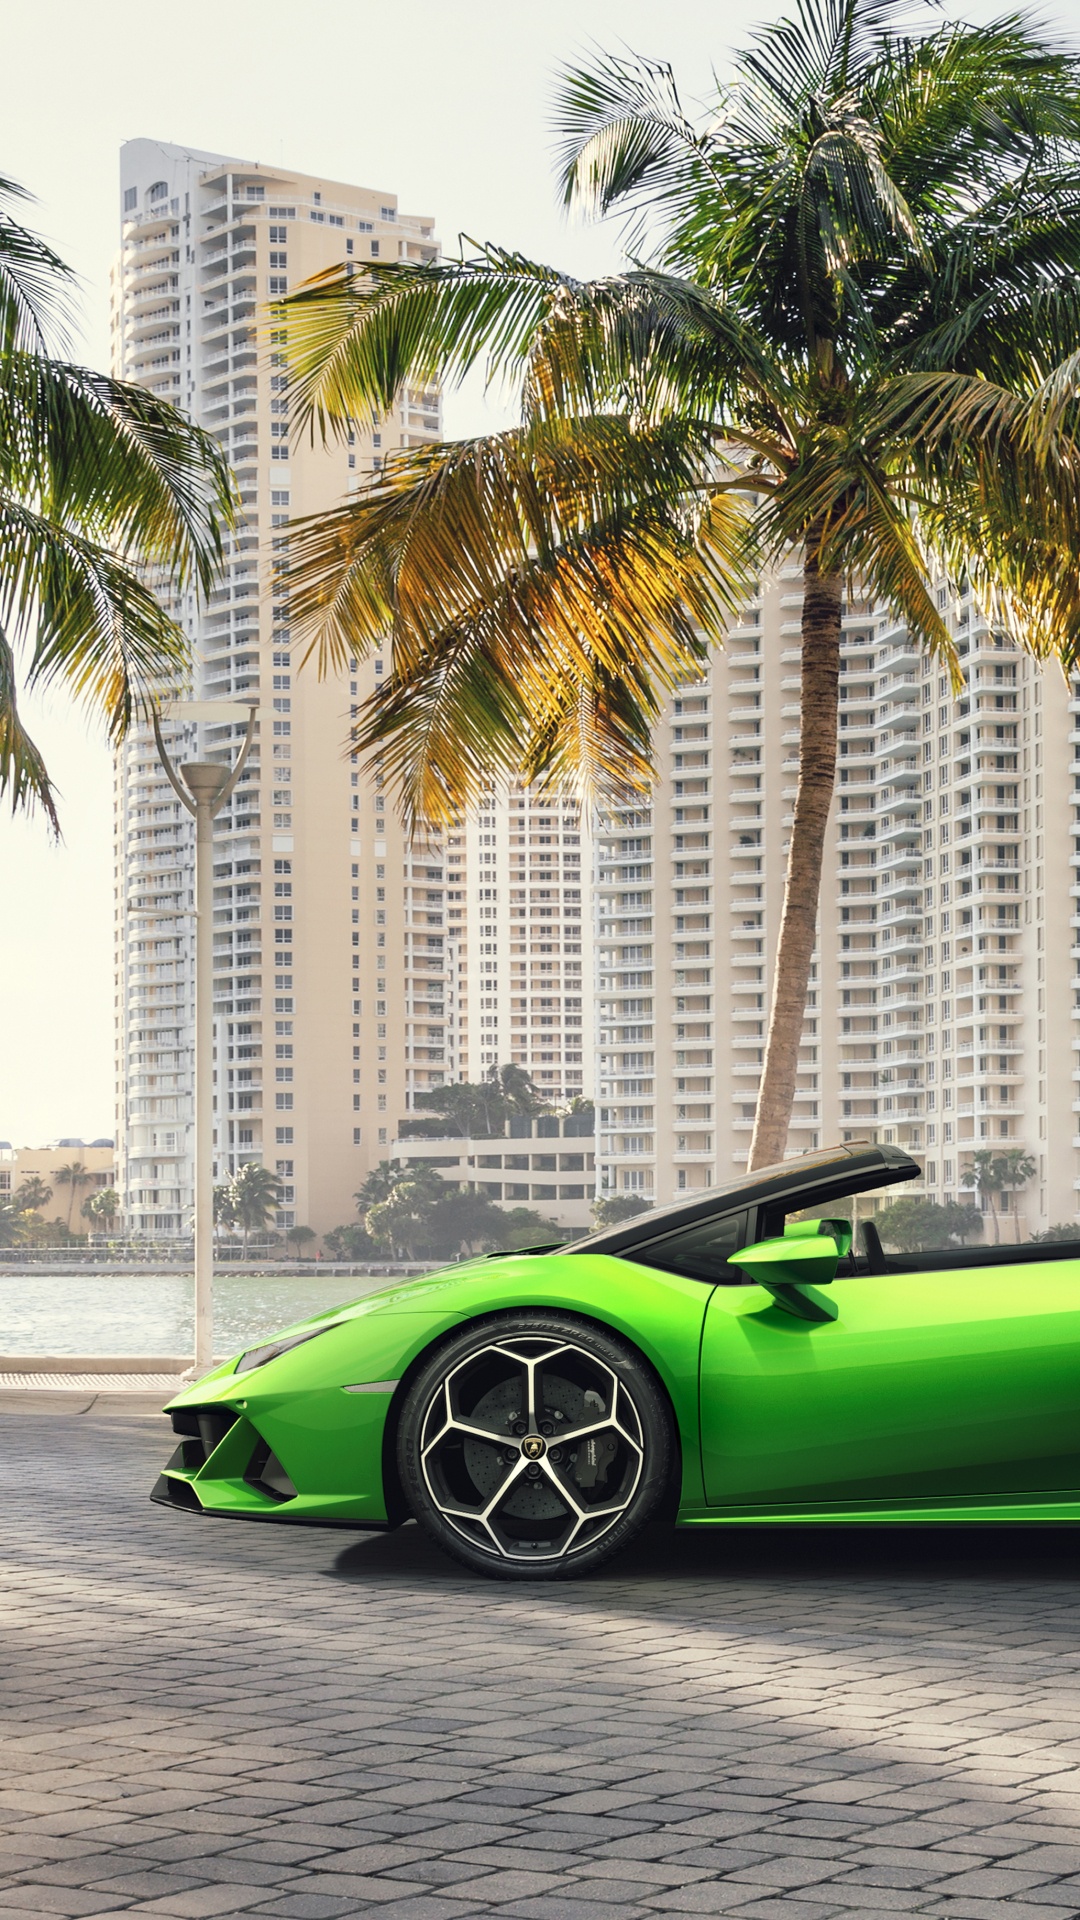 Green Ferrari Sports Car on Road During Daytime. Wallpaper in 1080x1920 Resolution